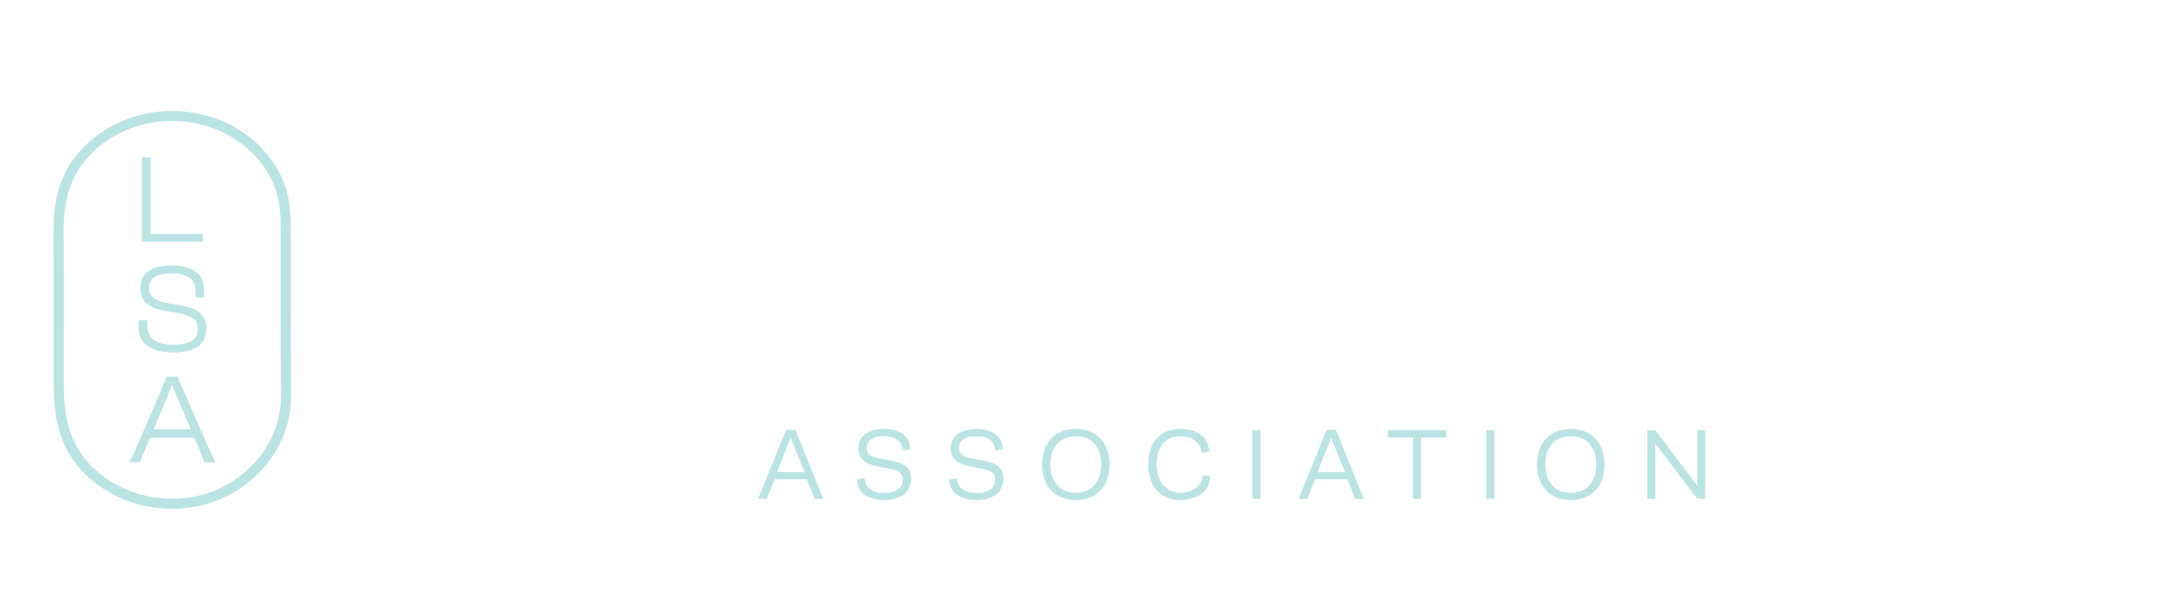 LSA society logo transparent background